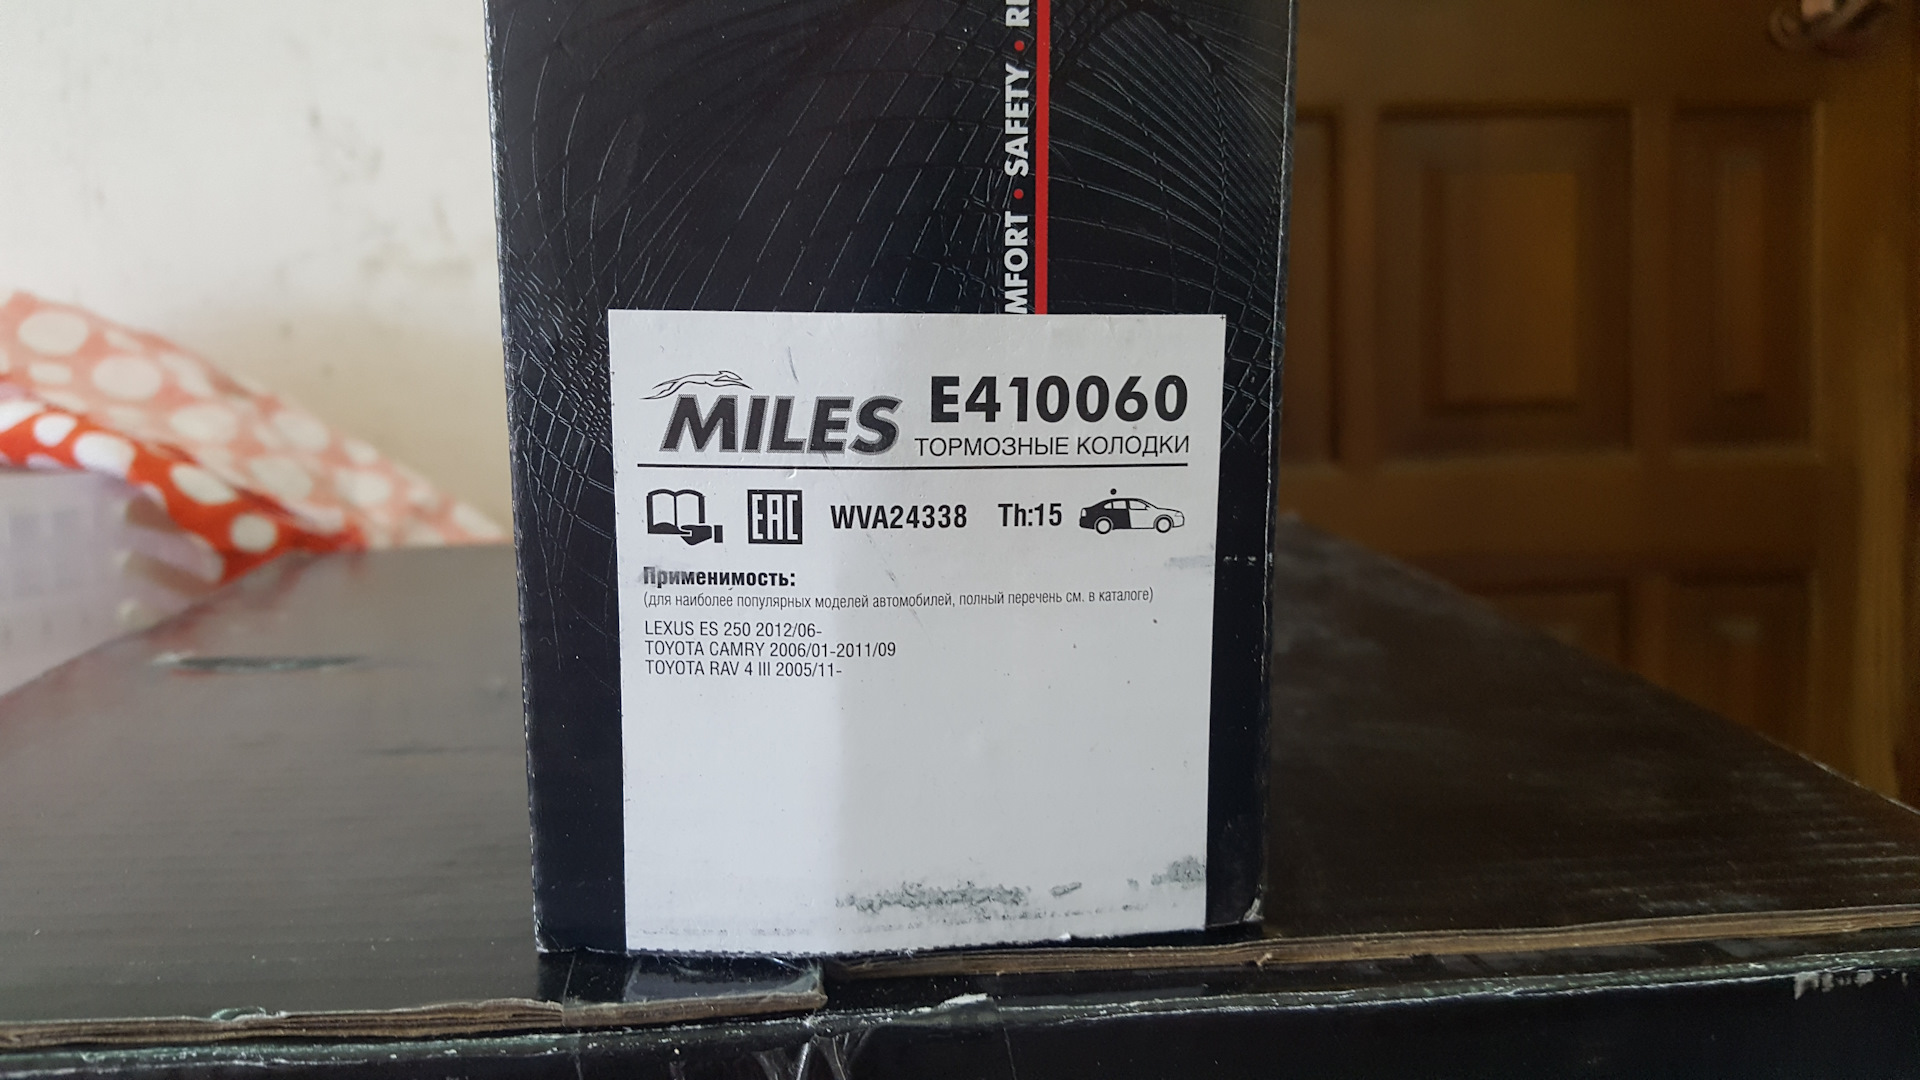 Miles pro. Miles Pro e5 колодки. E410060. Miles e410060. Колодки Miles коробка.